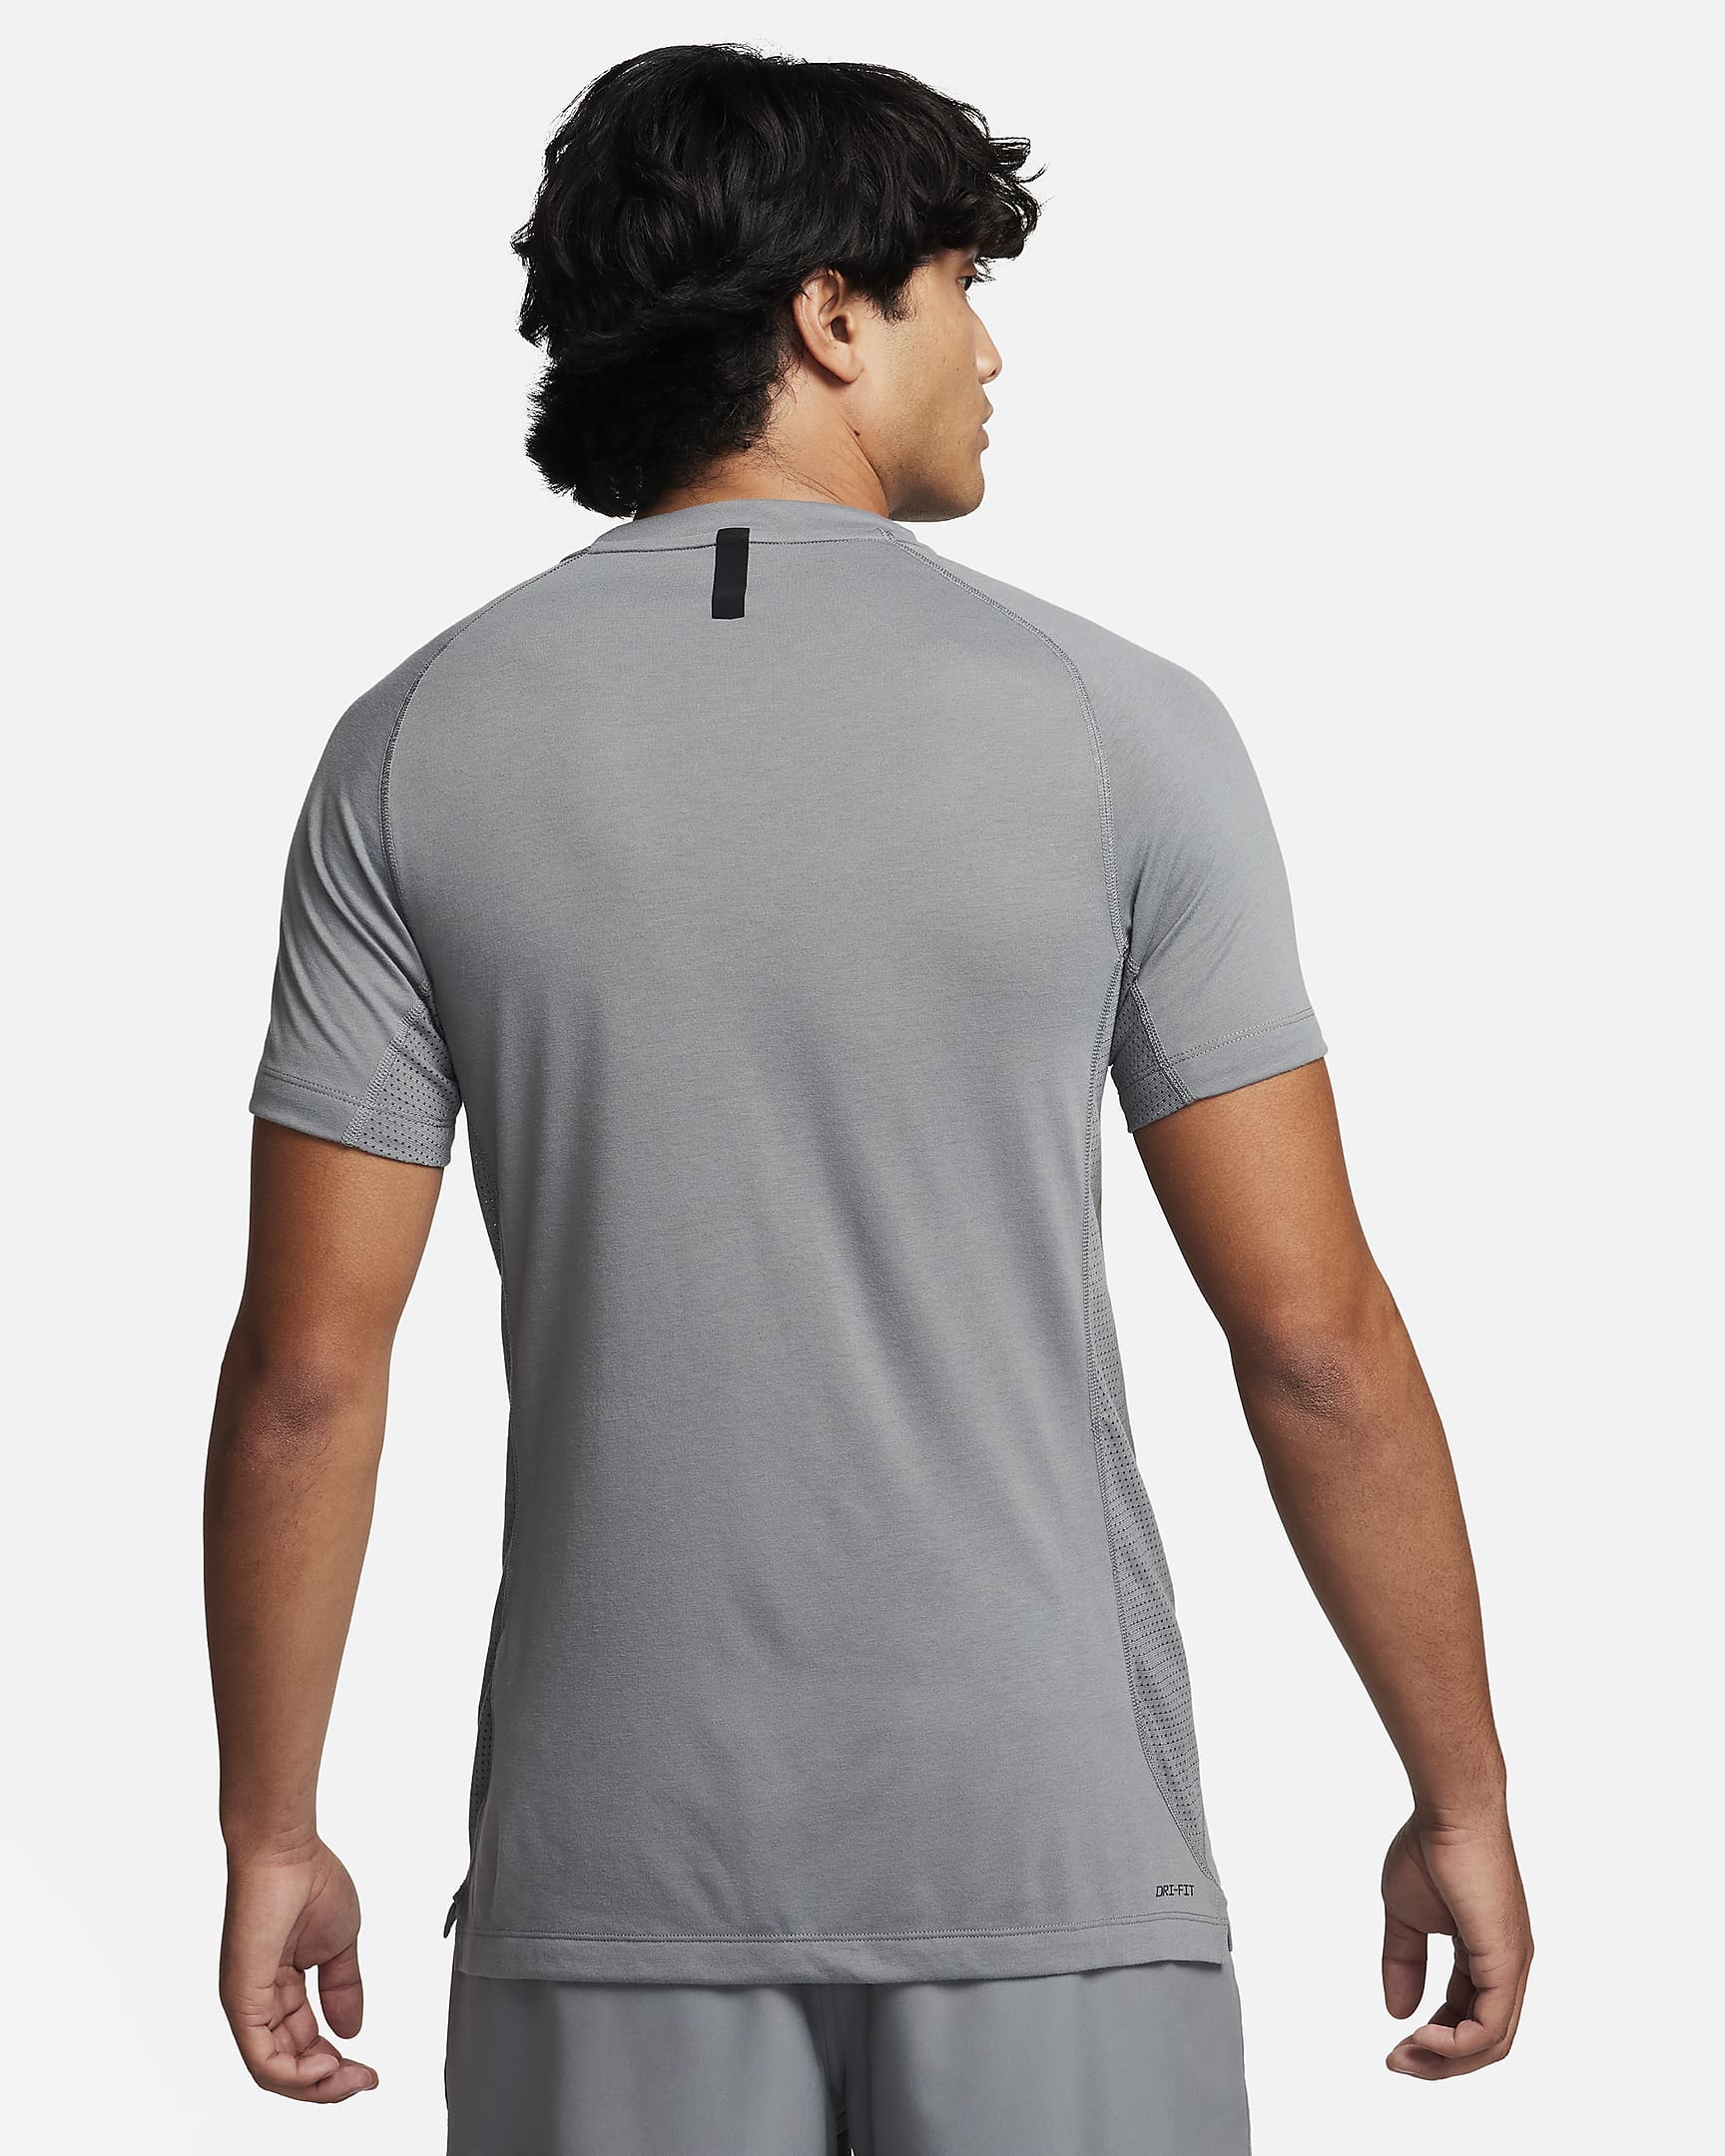 Nike Flex Rep Men's Dri-FIT Short-Sleeve Fitness Top - Smoke Grey/Black